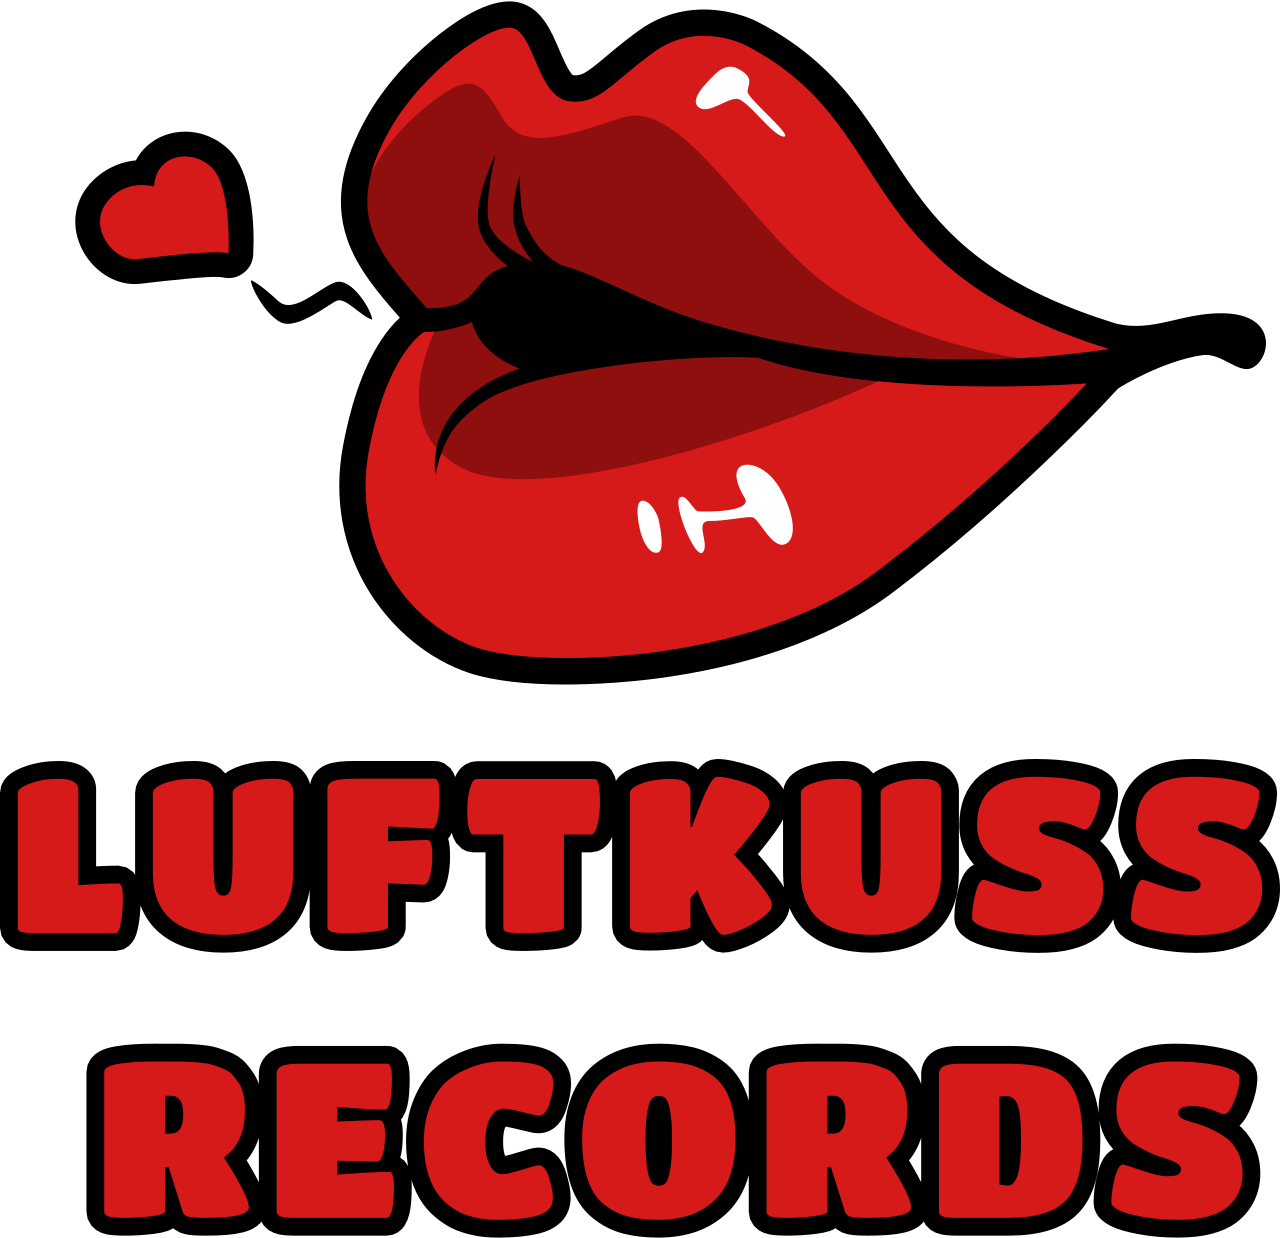 Luftkuss 
Records's logo